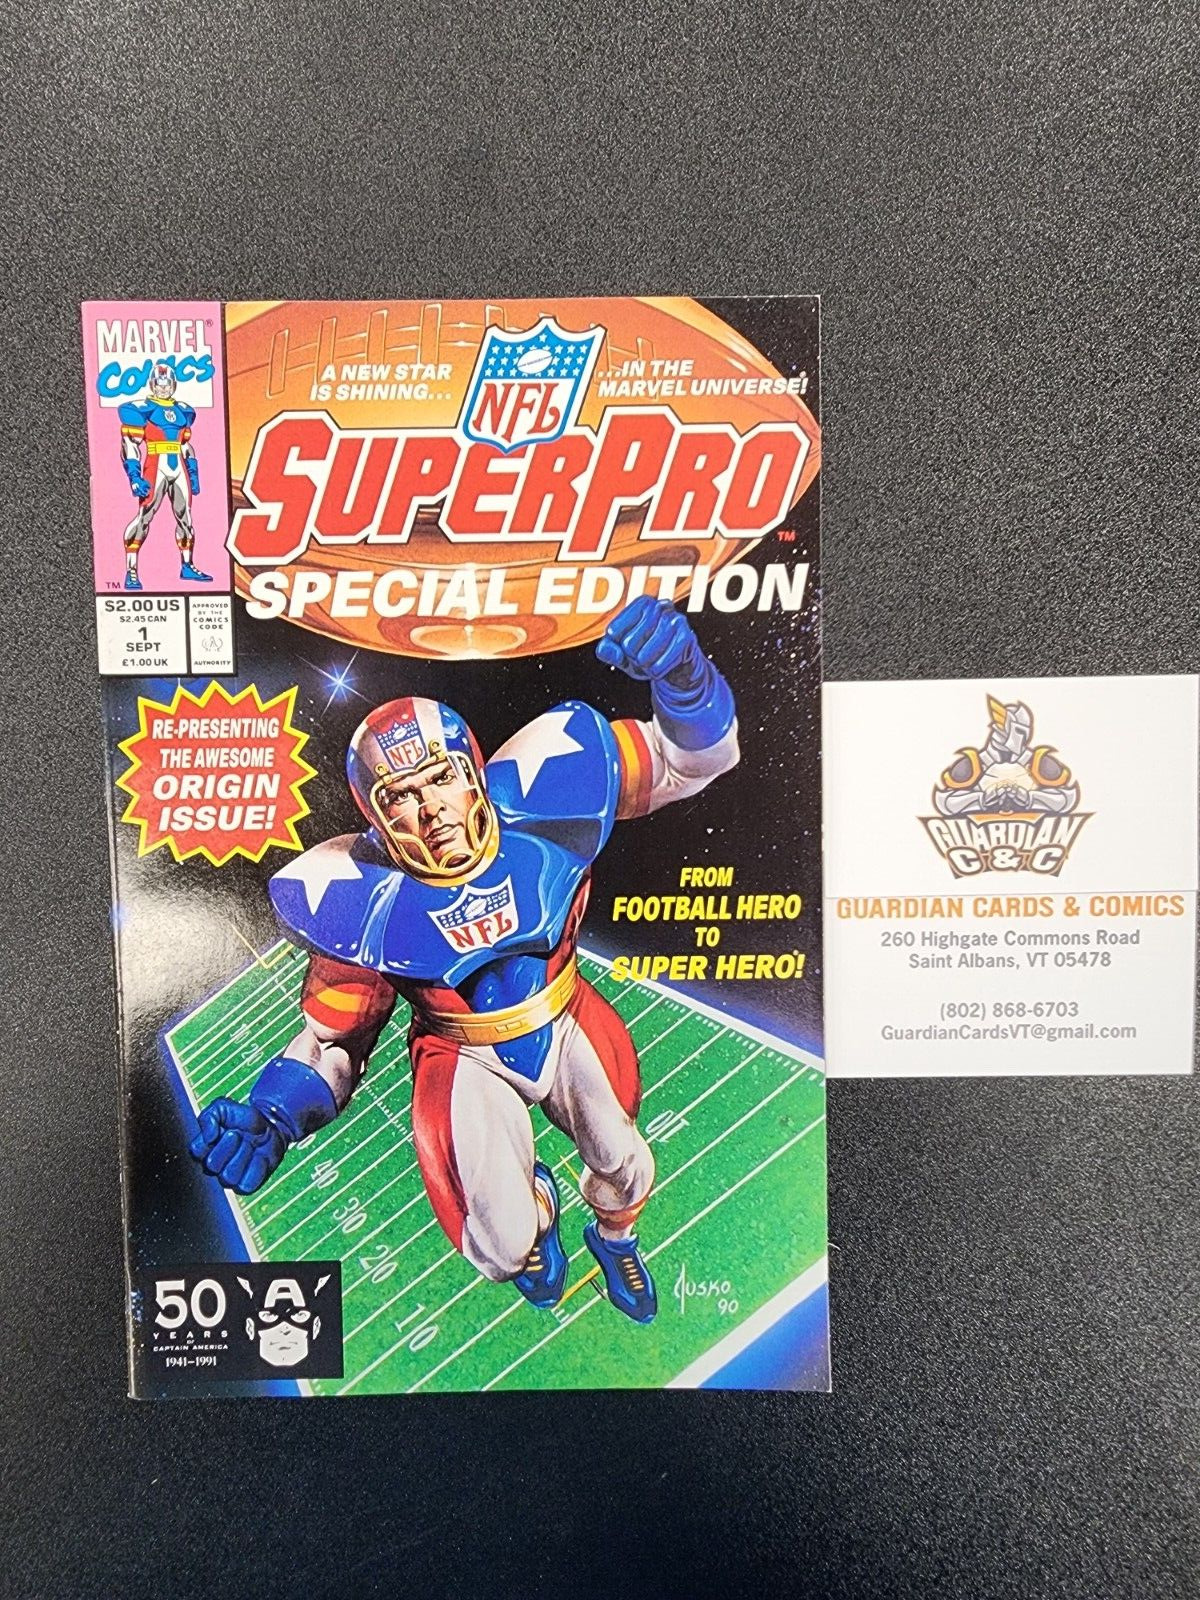 SuperPro Special Edition #1 (Marvel Comics, 1991) Origin Issue